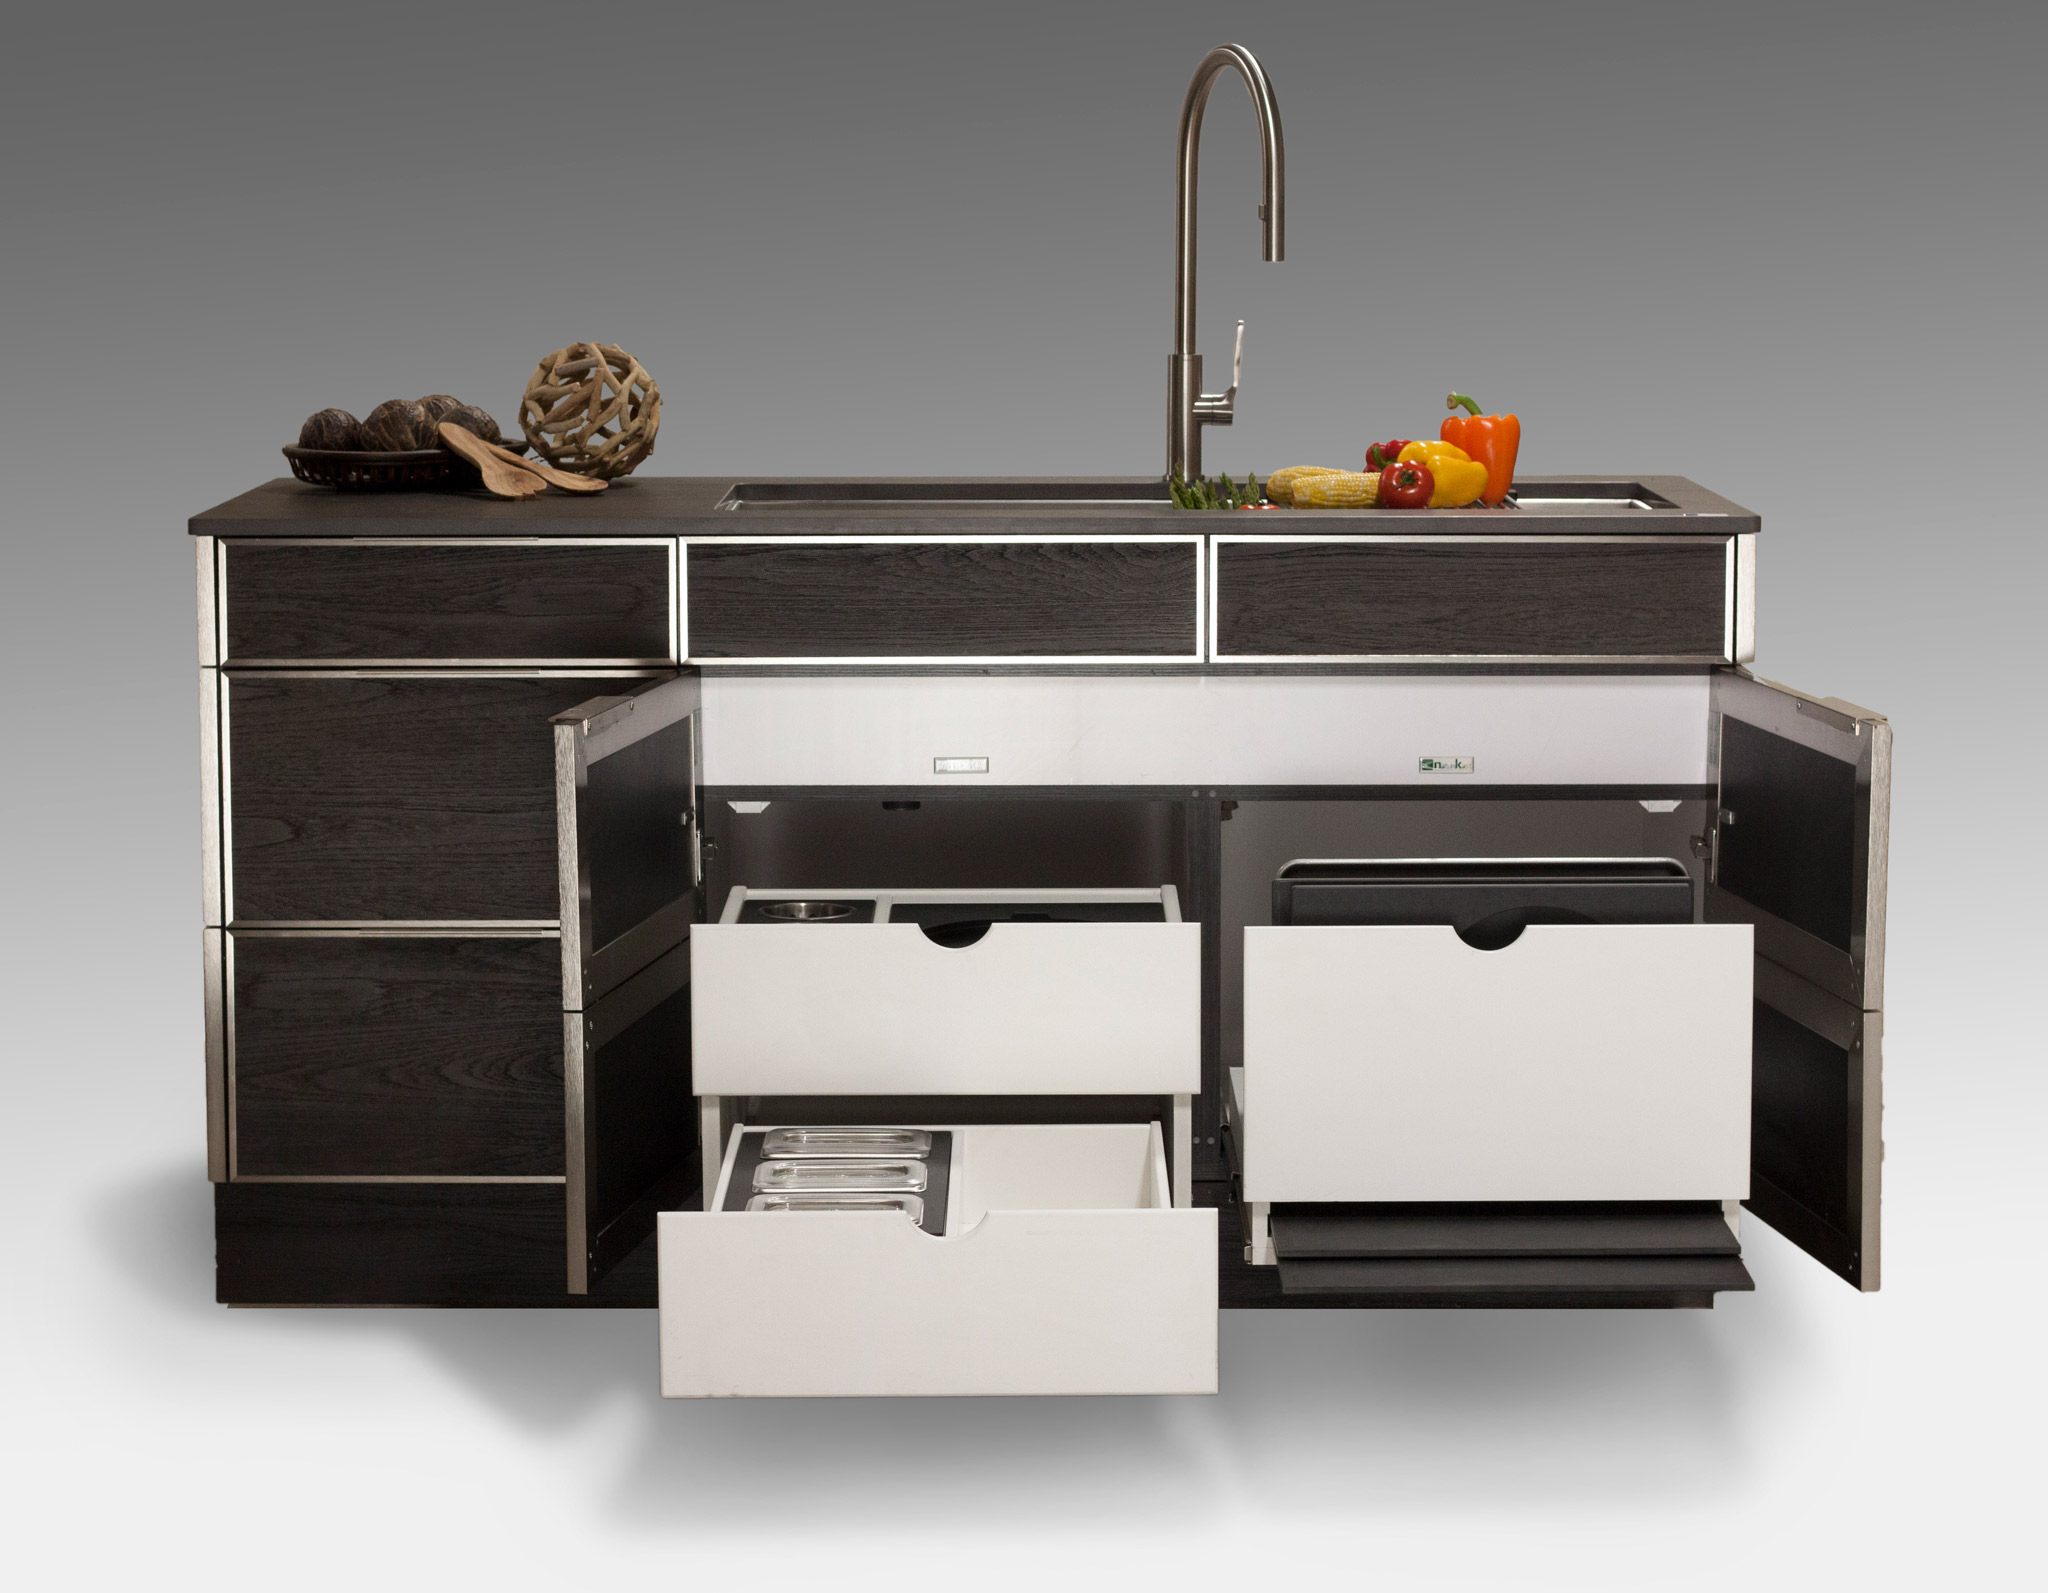 Mini Kitchens, Micro Kitchens- business & home - Gallery Kitchen Design